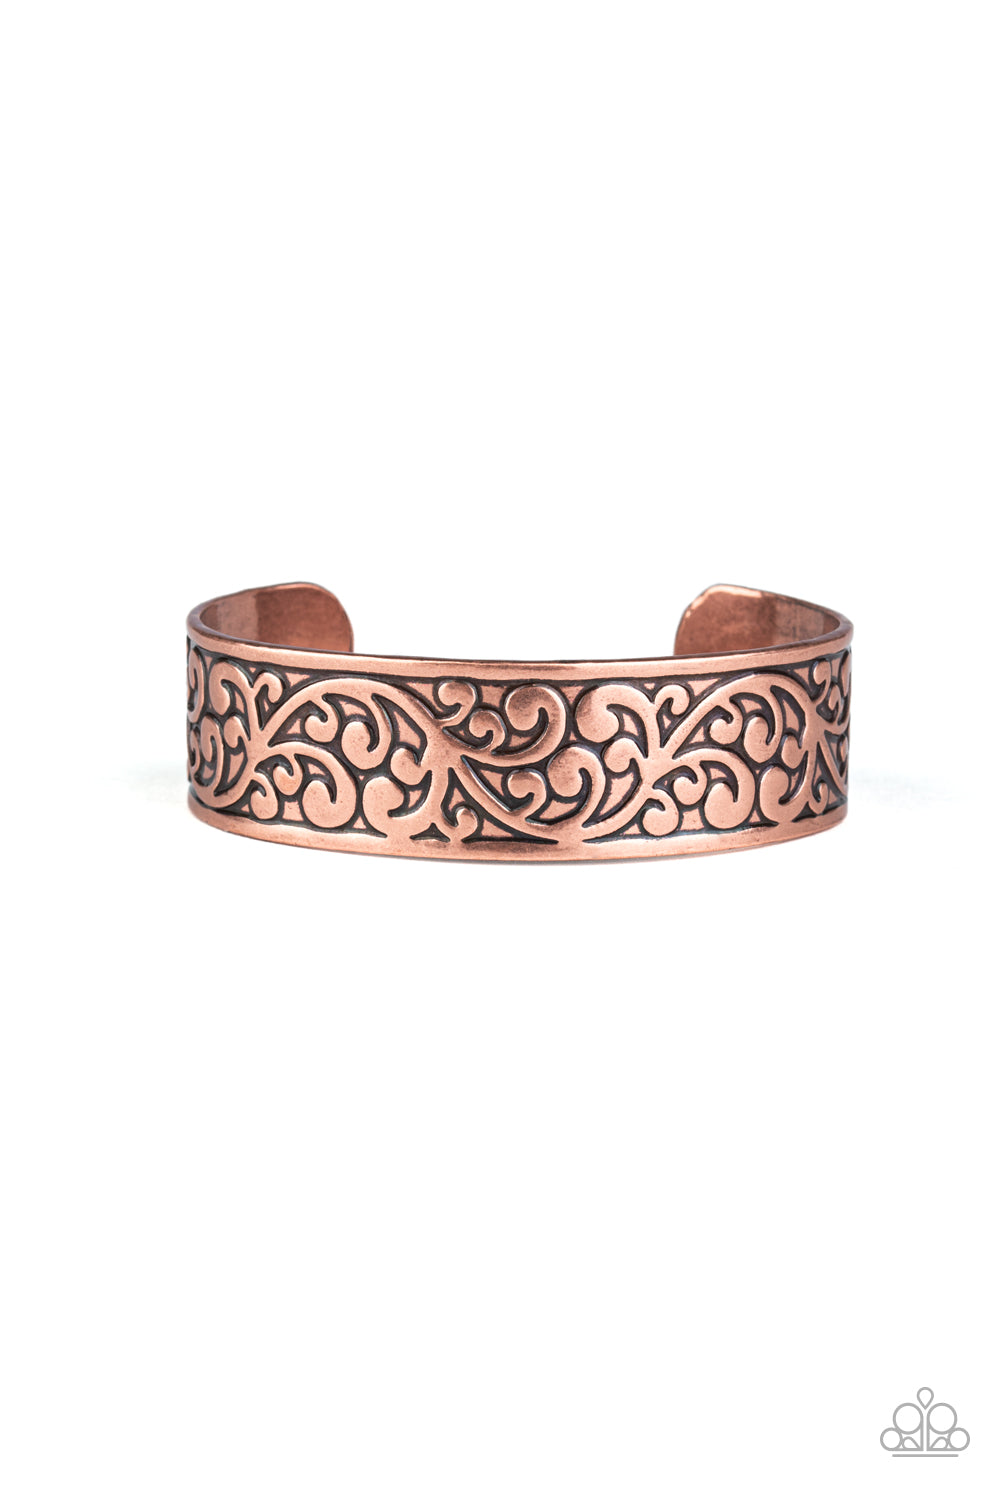 Read The VINE Print - Copper Bracelet